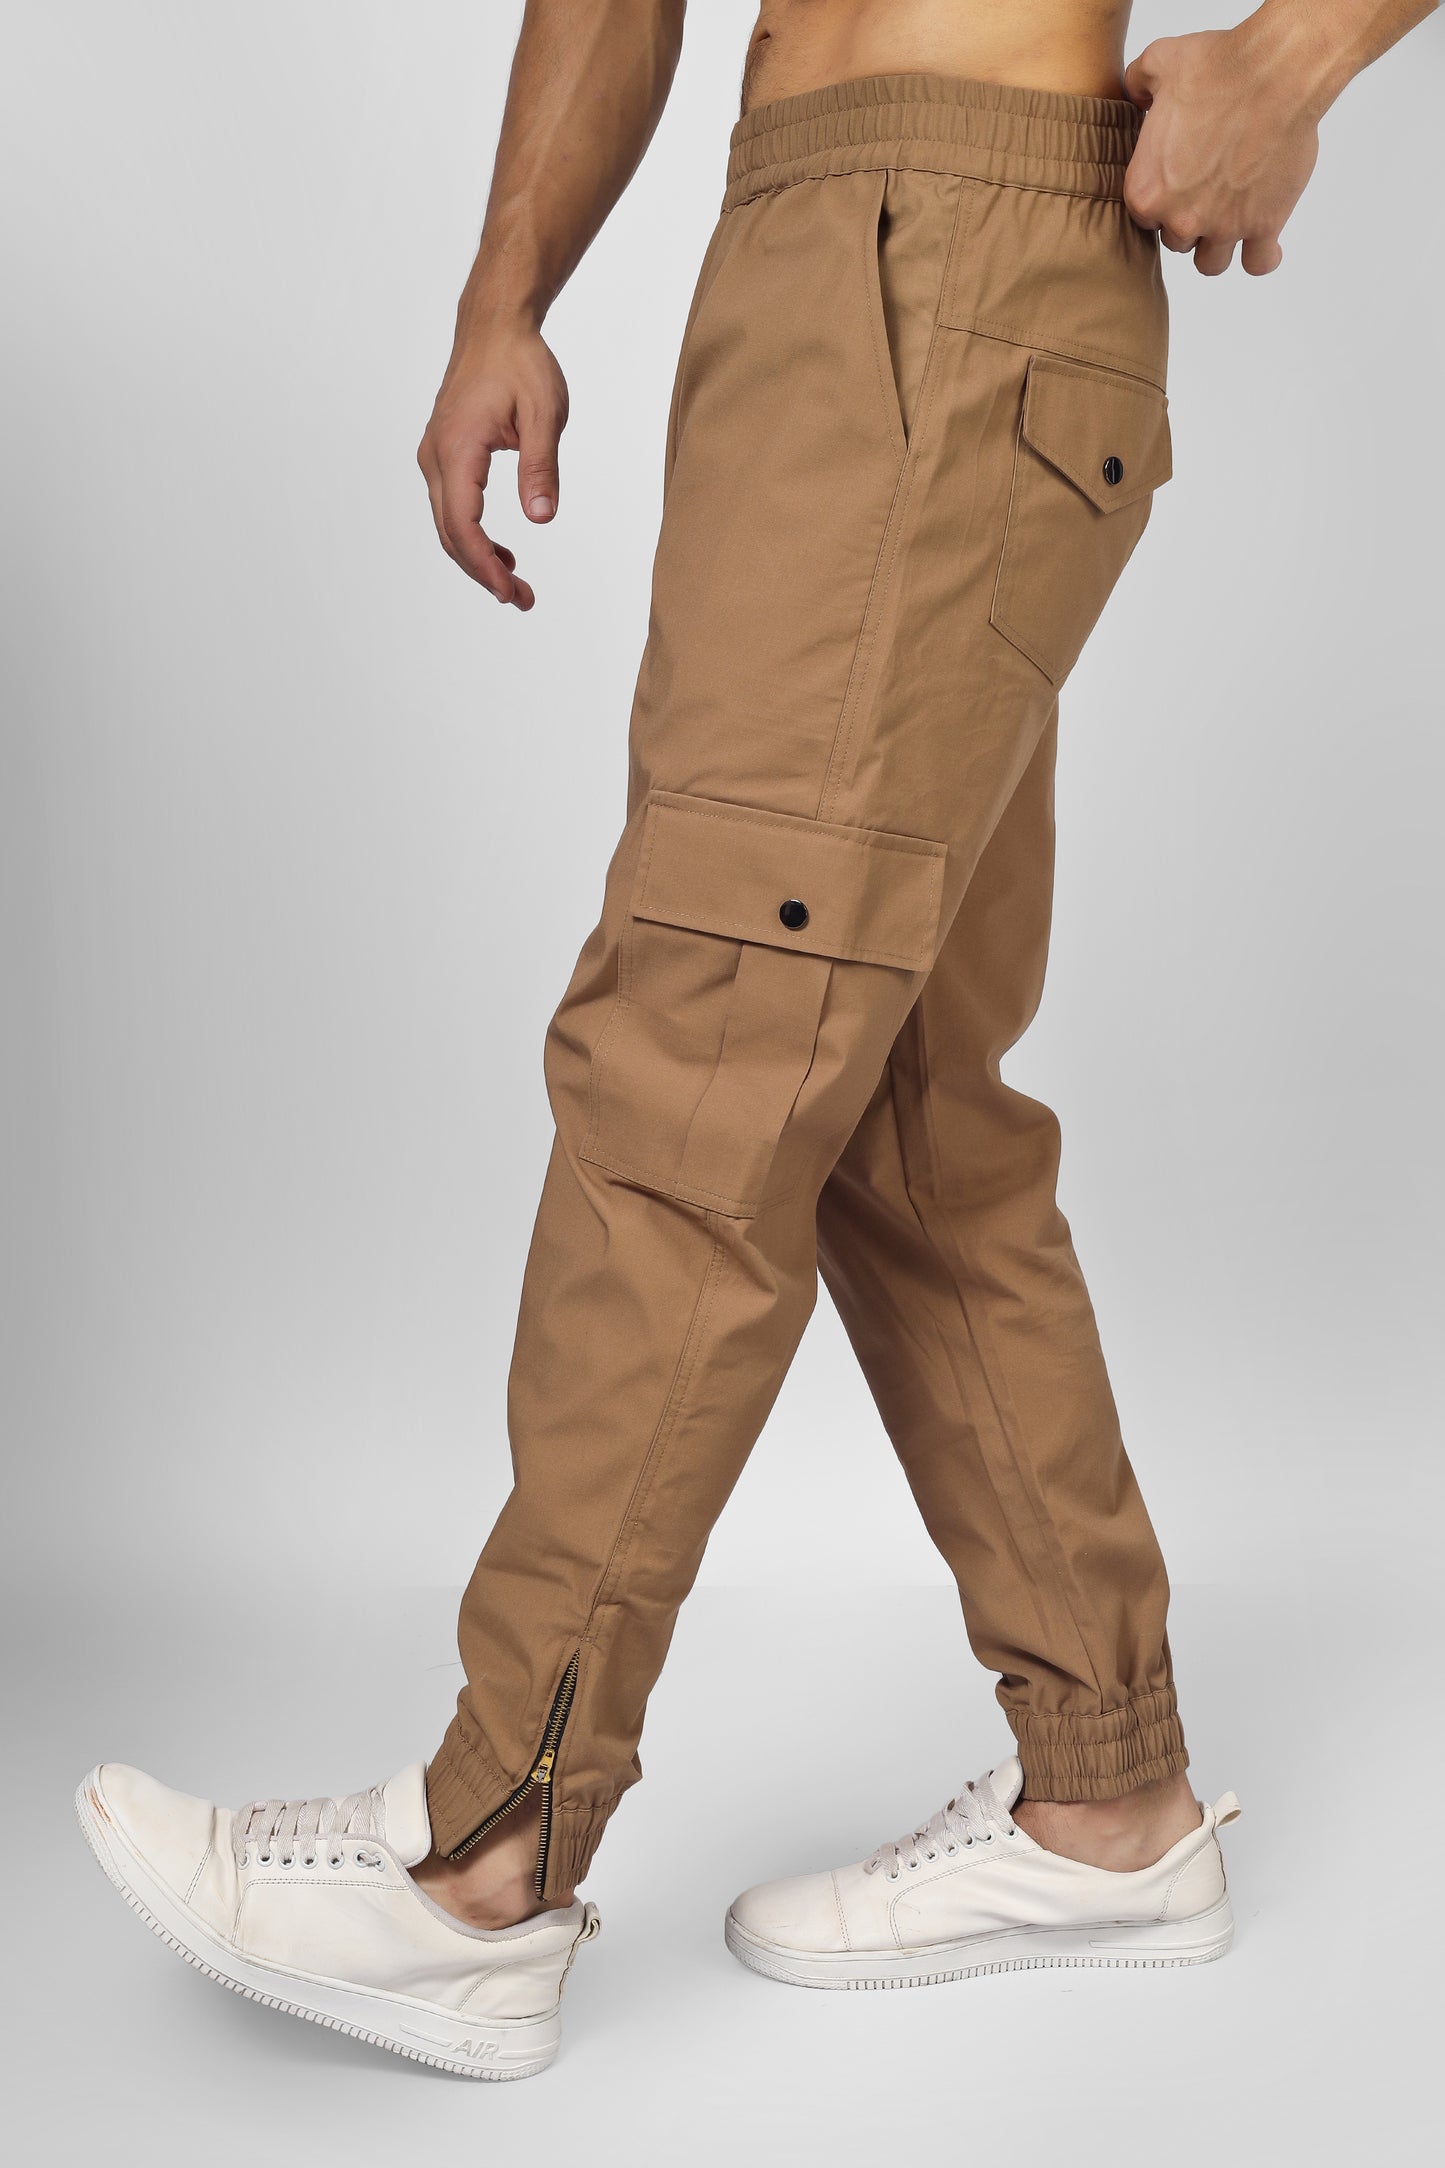 Autumn Brown 6 Pocket Cargo pants - Wearduds